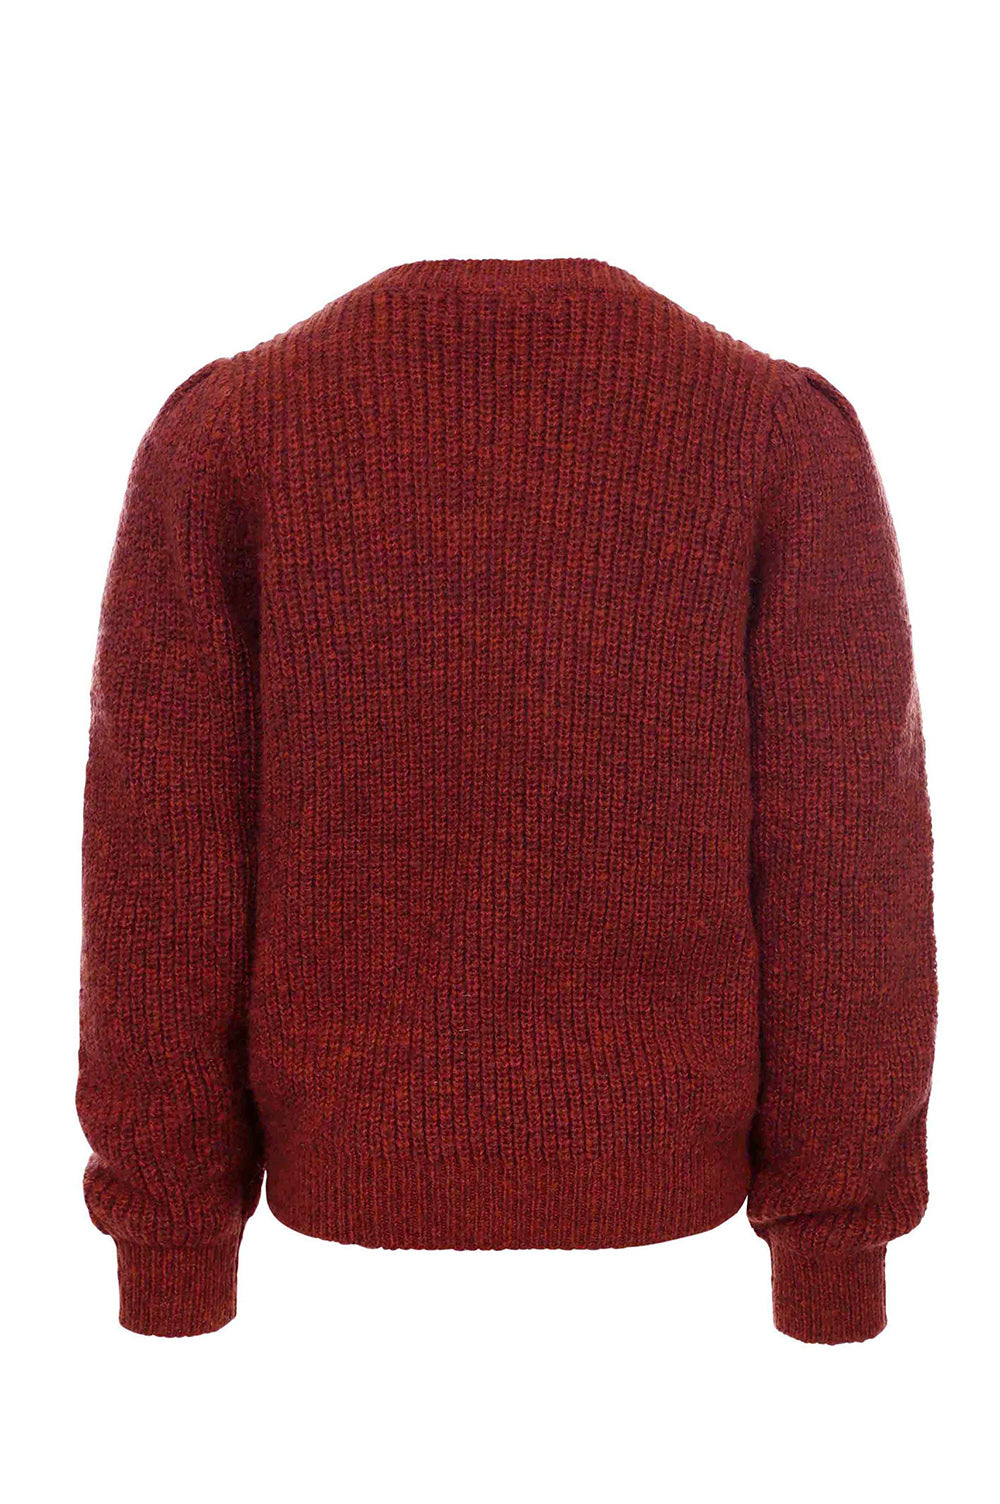 Meisjes Knitted Pullover van LOOXS Little in de kleur TERRA in maat 128.